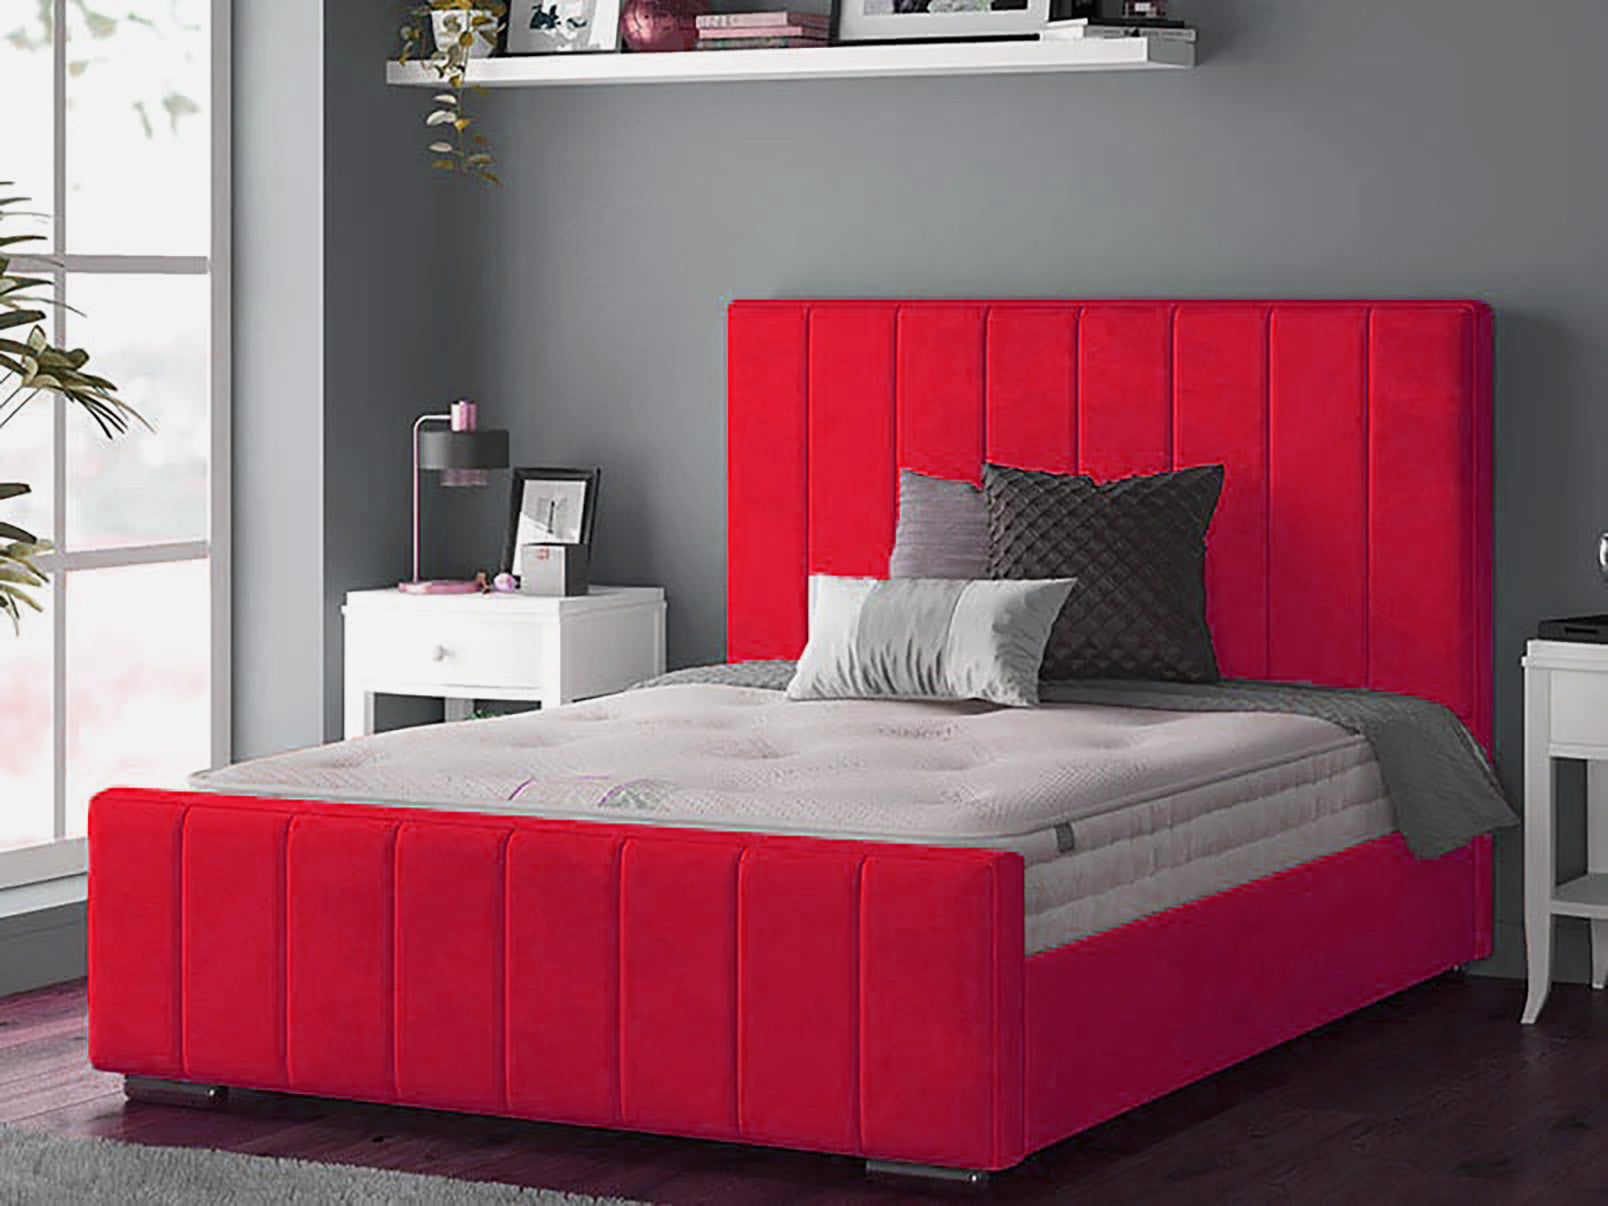 Perth Slatted Bed Frame With Ottoman Lift Storage Option - Plush Velvet Red